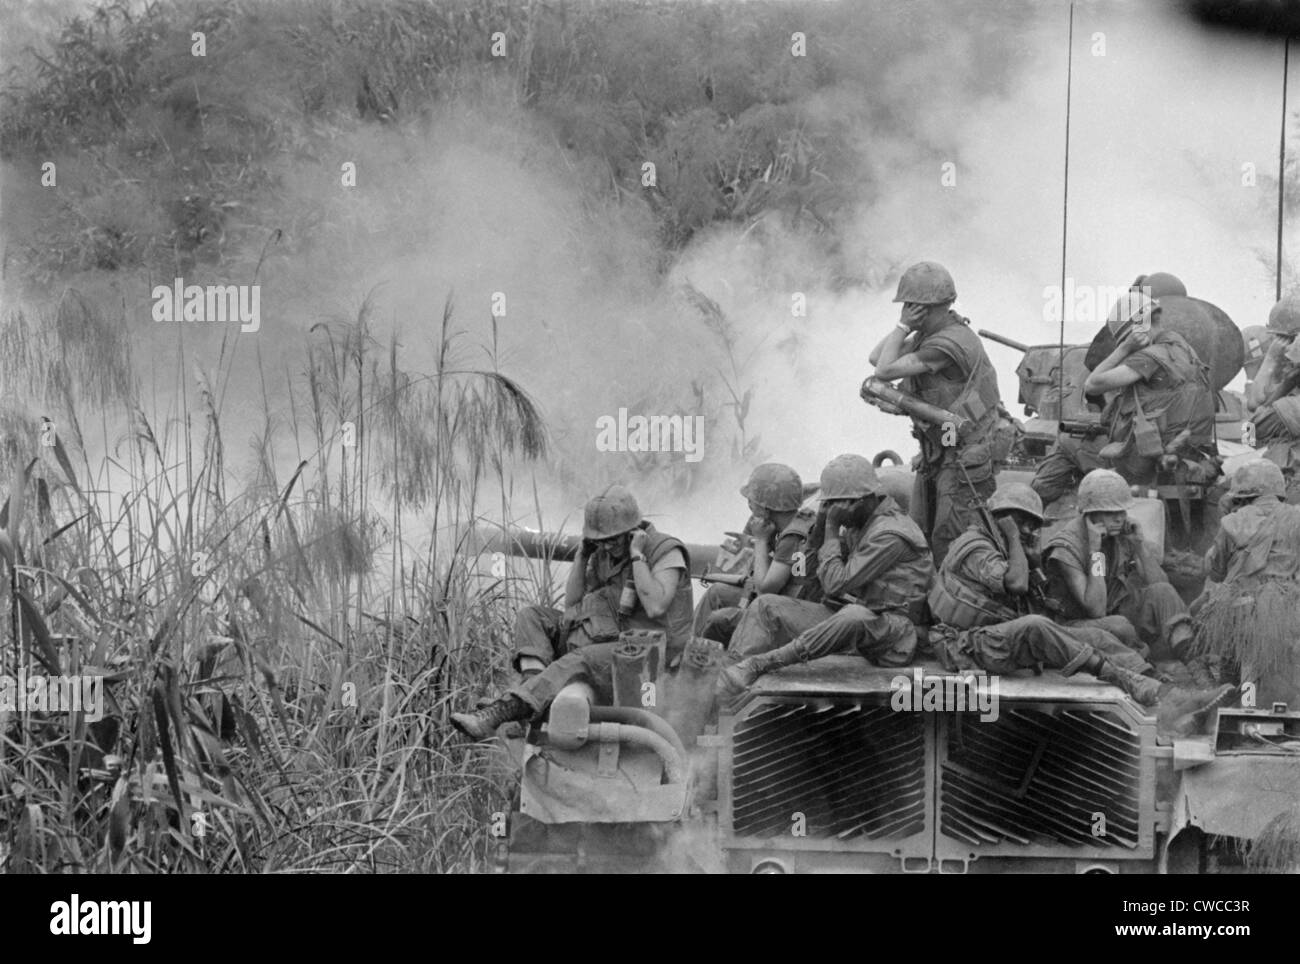 Vietnam War. Marines riding atop an M-48 tank cover their ears as the 90mm gun fires southwest of Phu Bai. April 5, 1968. Stock Photo